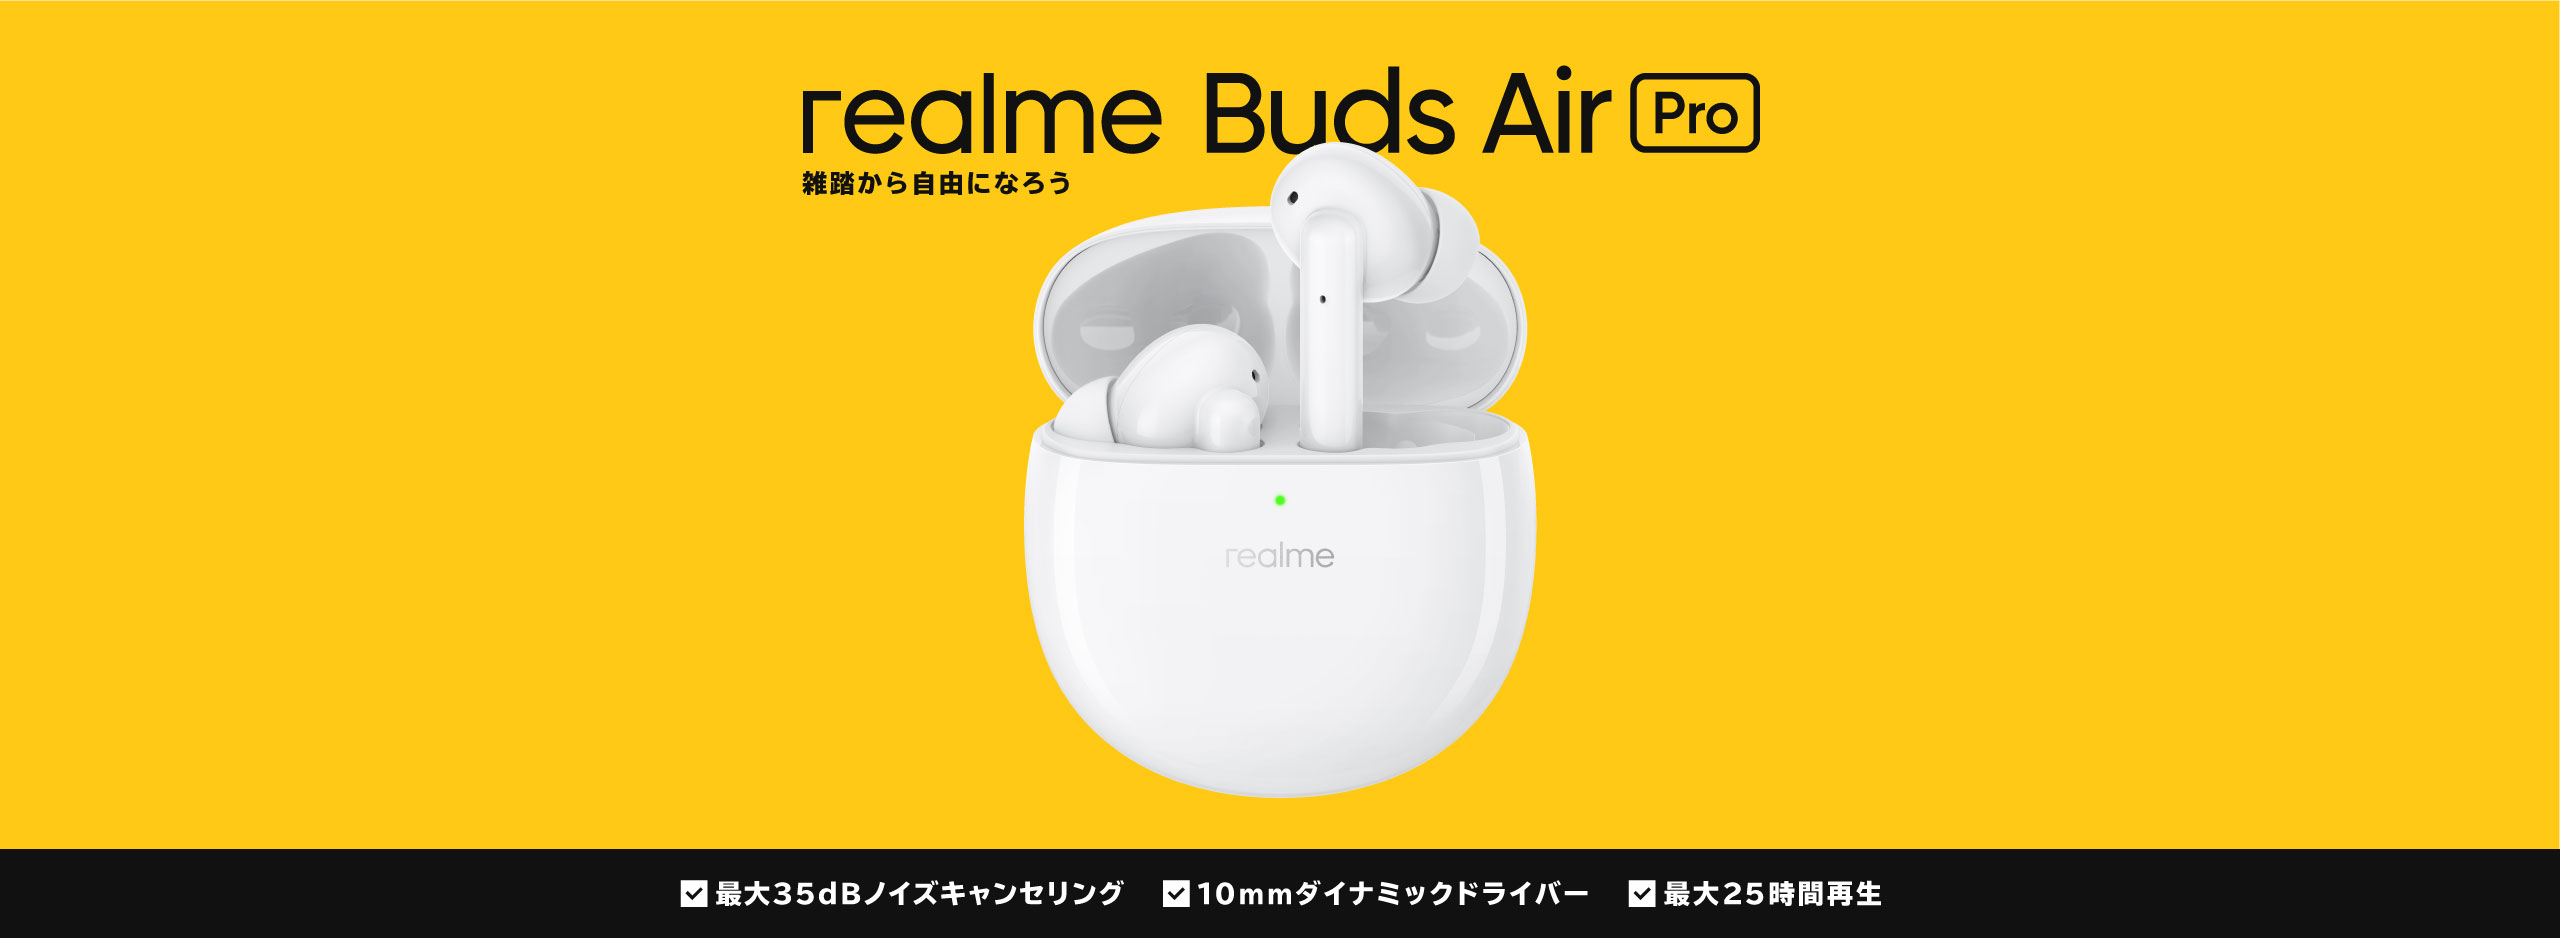 realme Buds Air Pro - realme (日本)